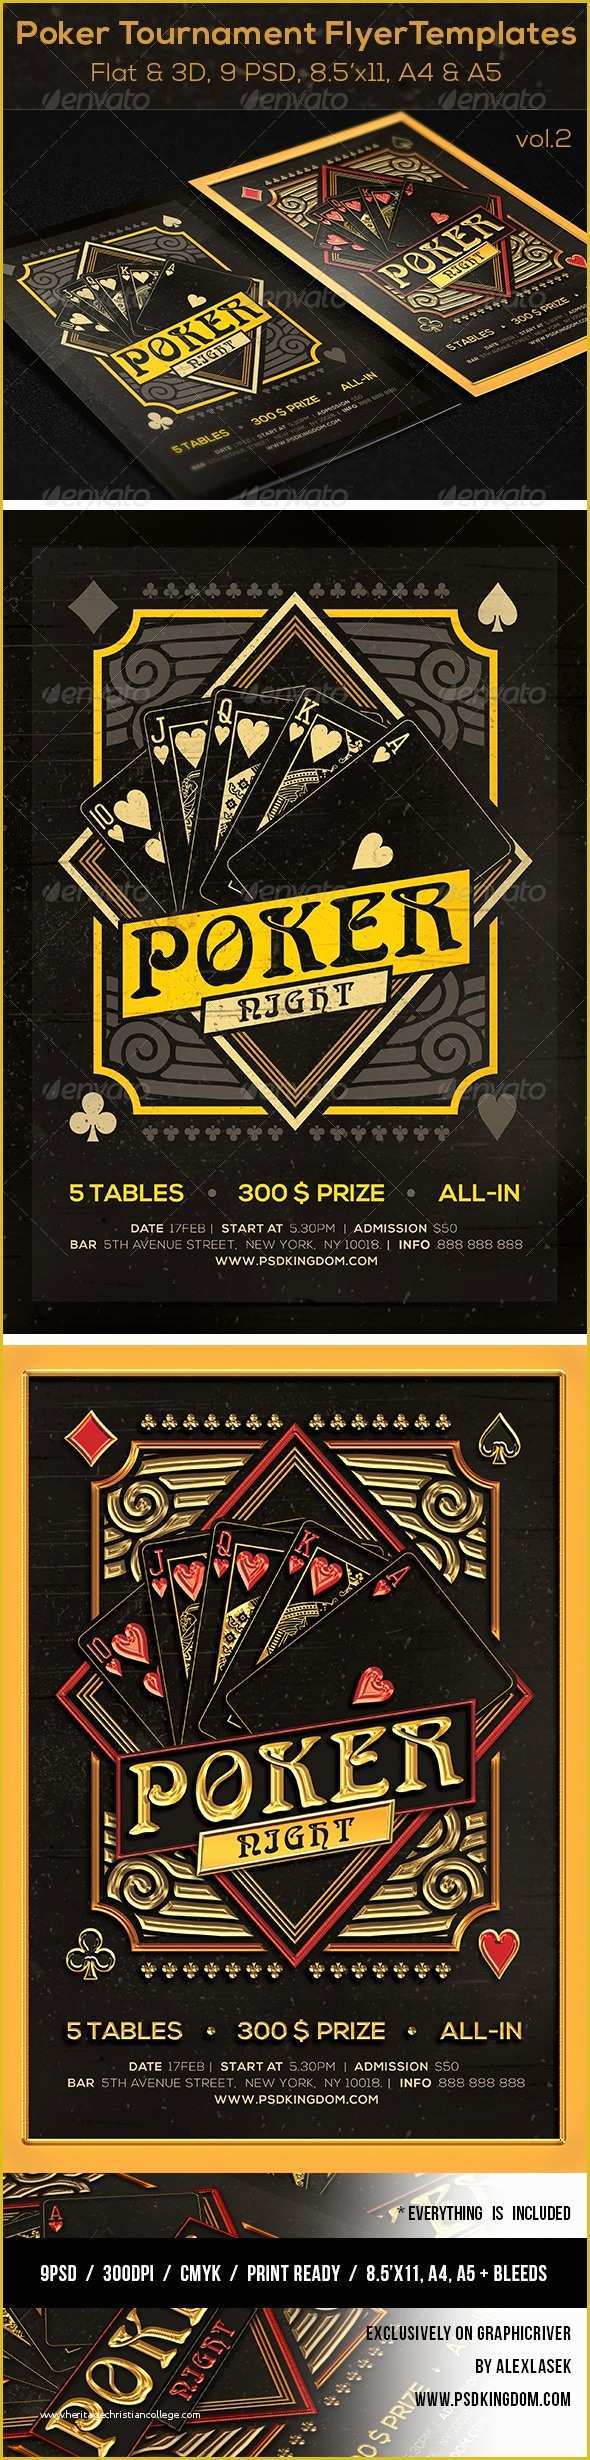 Poker tournament Flyer Template Free Of Poker tournament Poster Template Free software Free Download